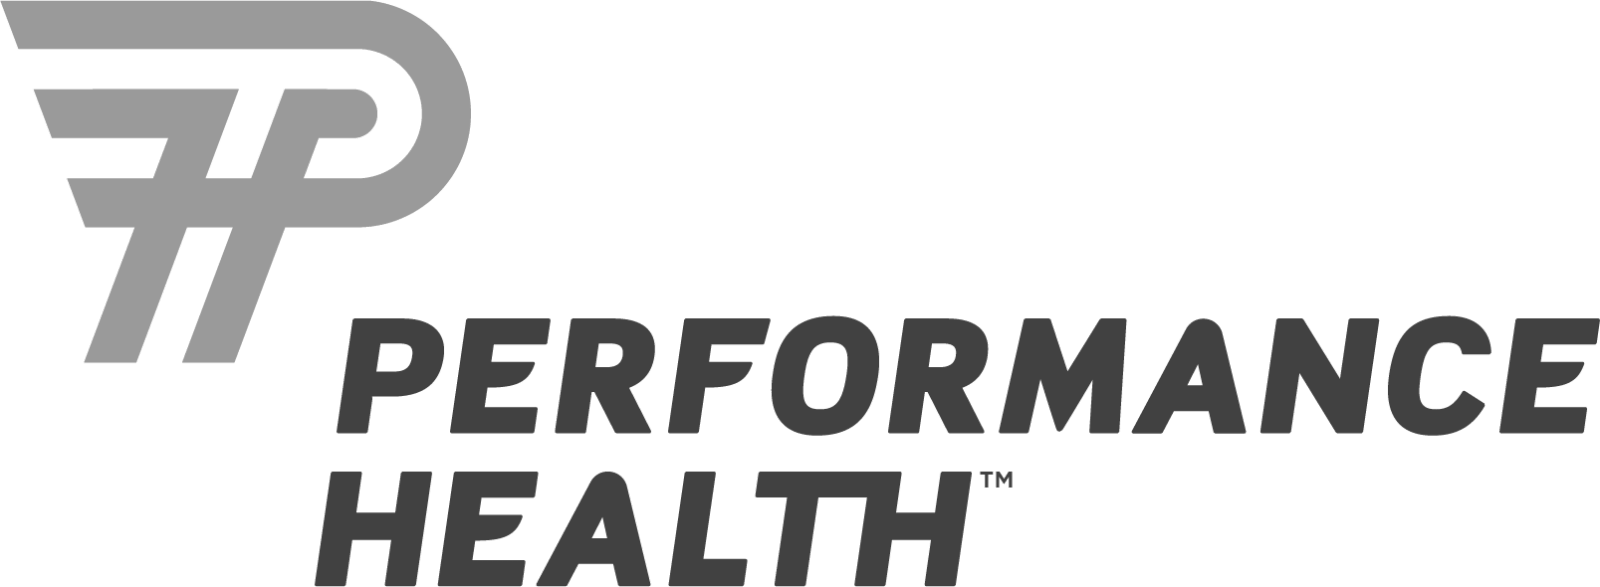 Performance Health